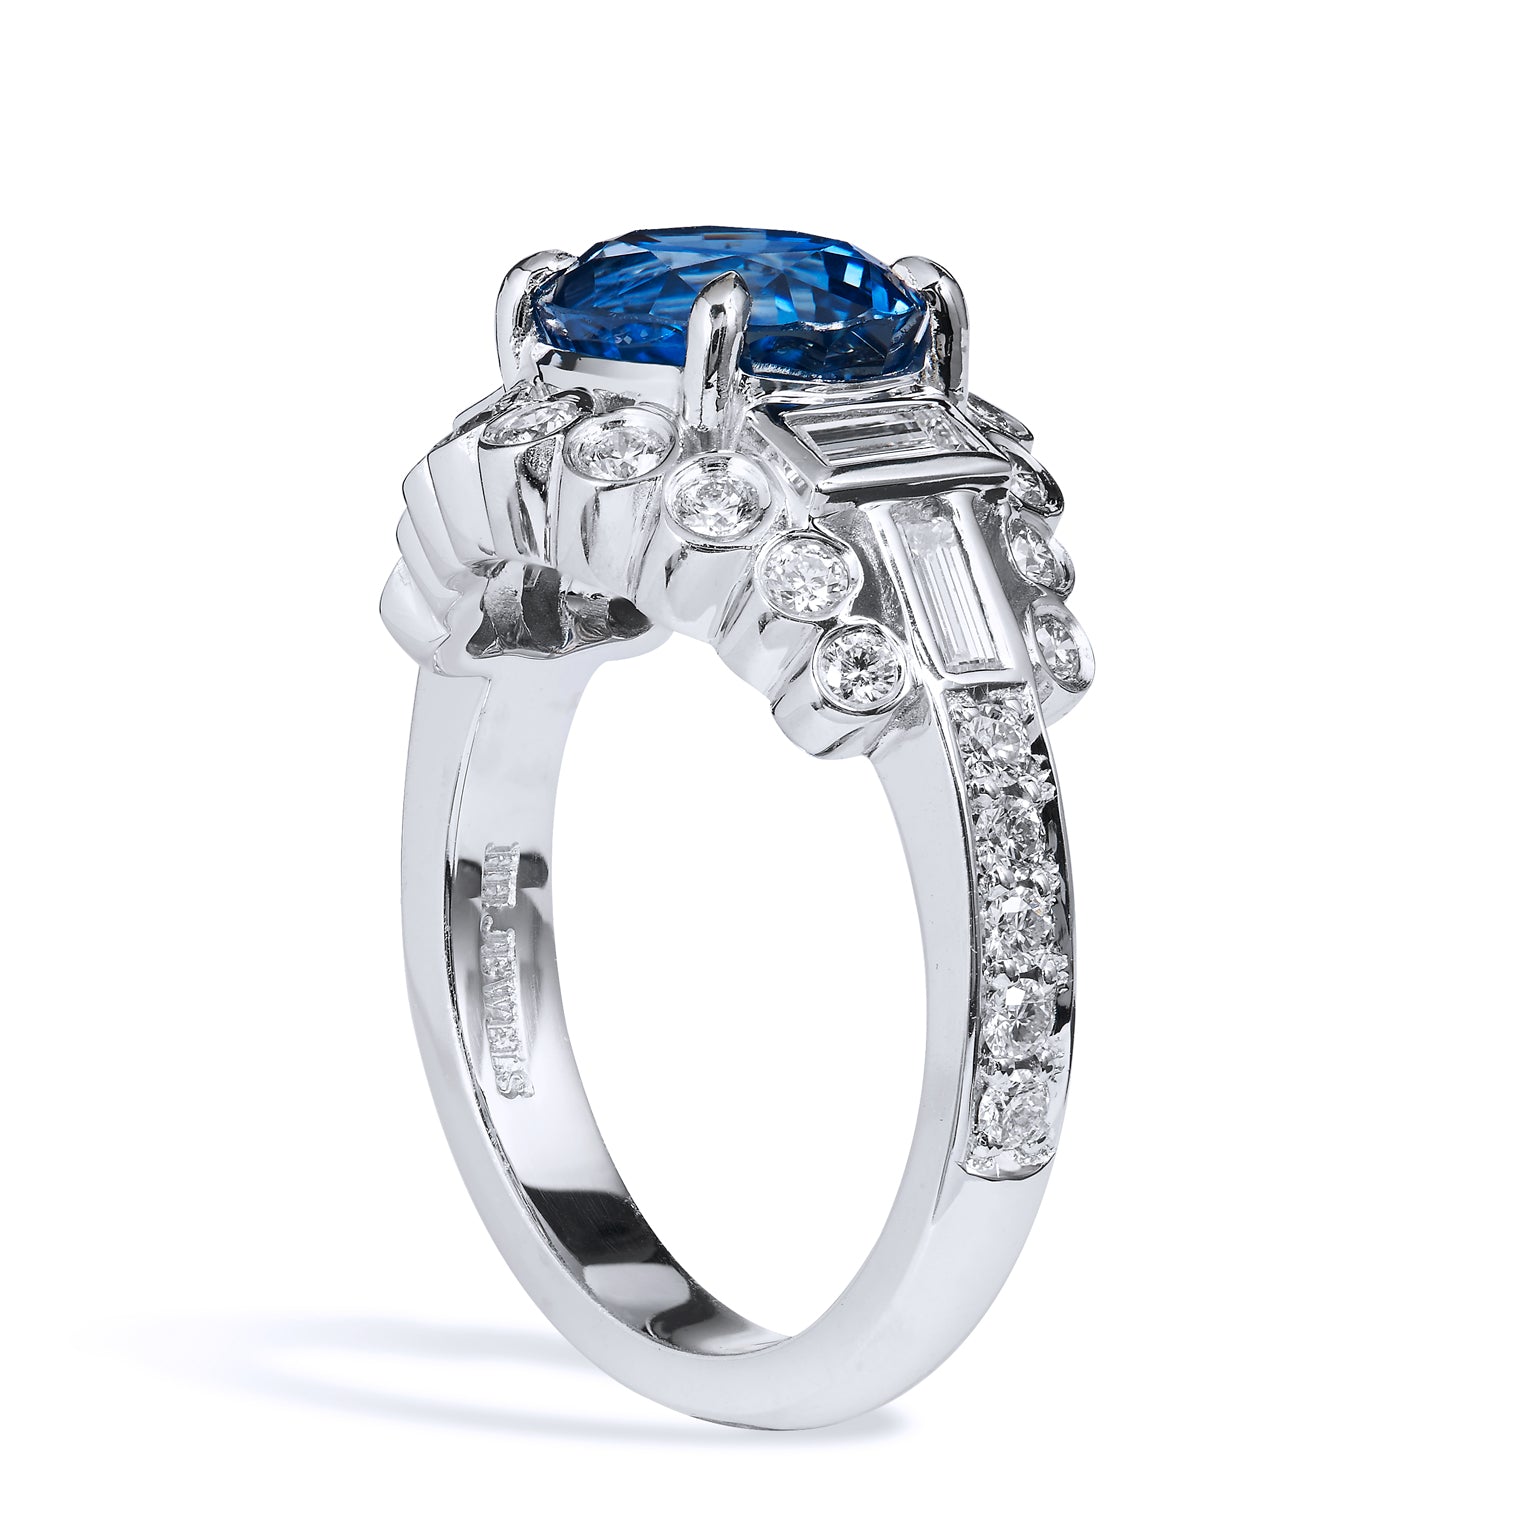 3.74 Carat Oval Ceylon Blue Sapphire And Diamond Ring Rings H&amp;H Jewels